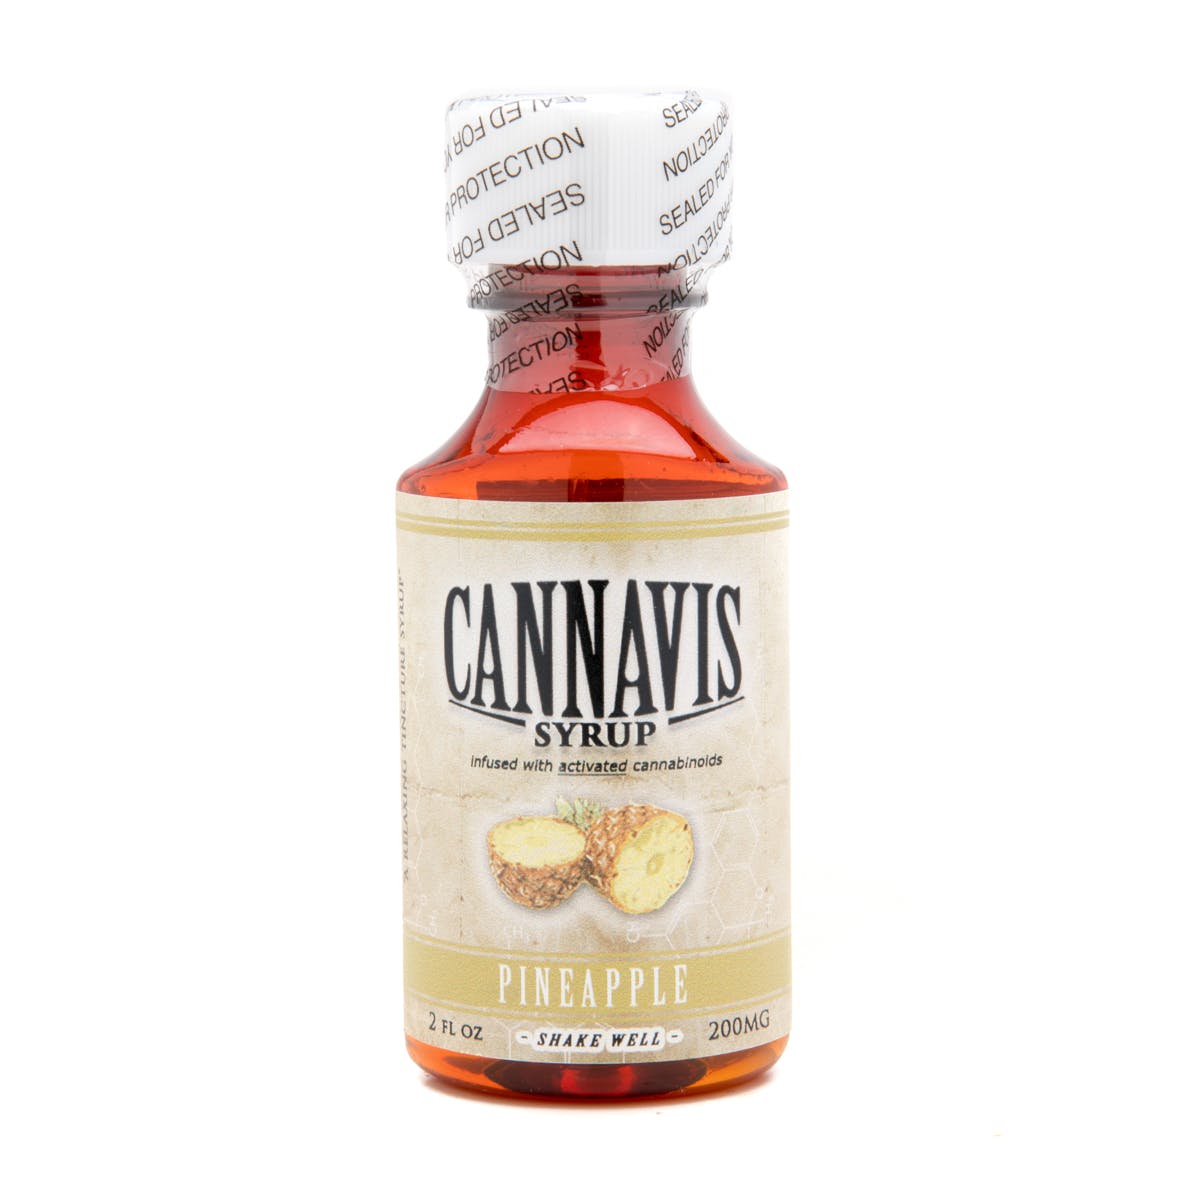 marijuana-dispensaries-treetop-la-in-los-angeles-cannavis-syrup-2c-pineapple-200mg